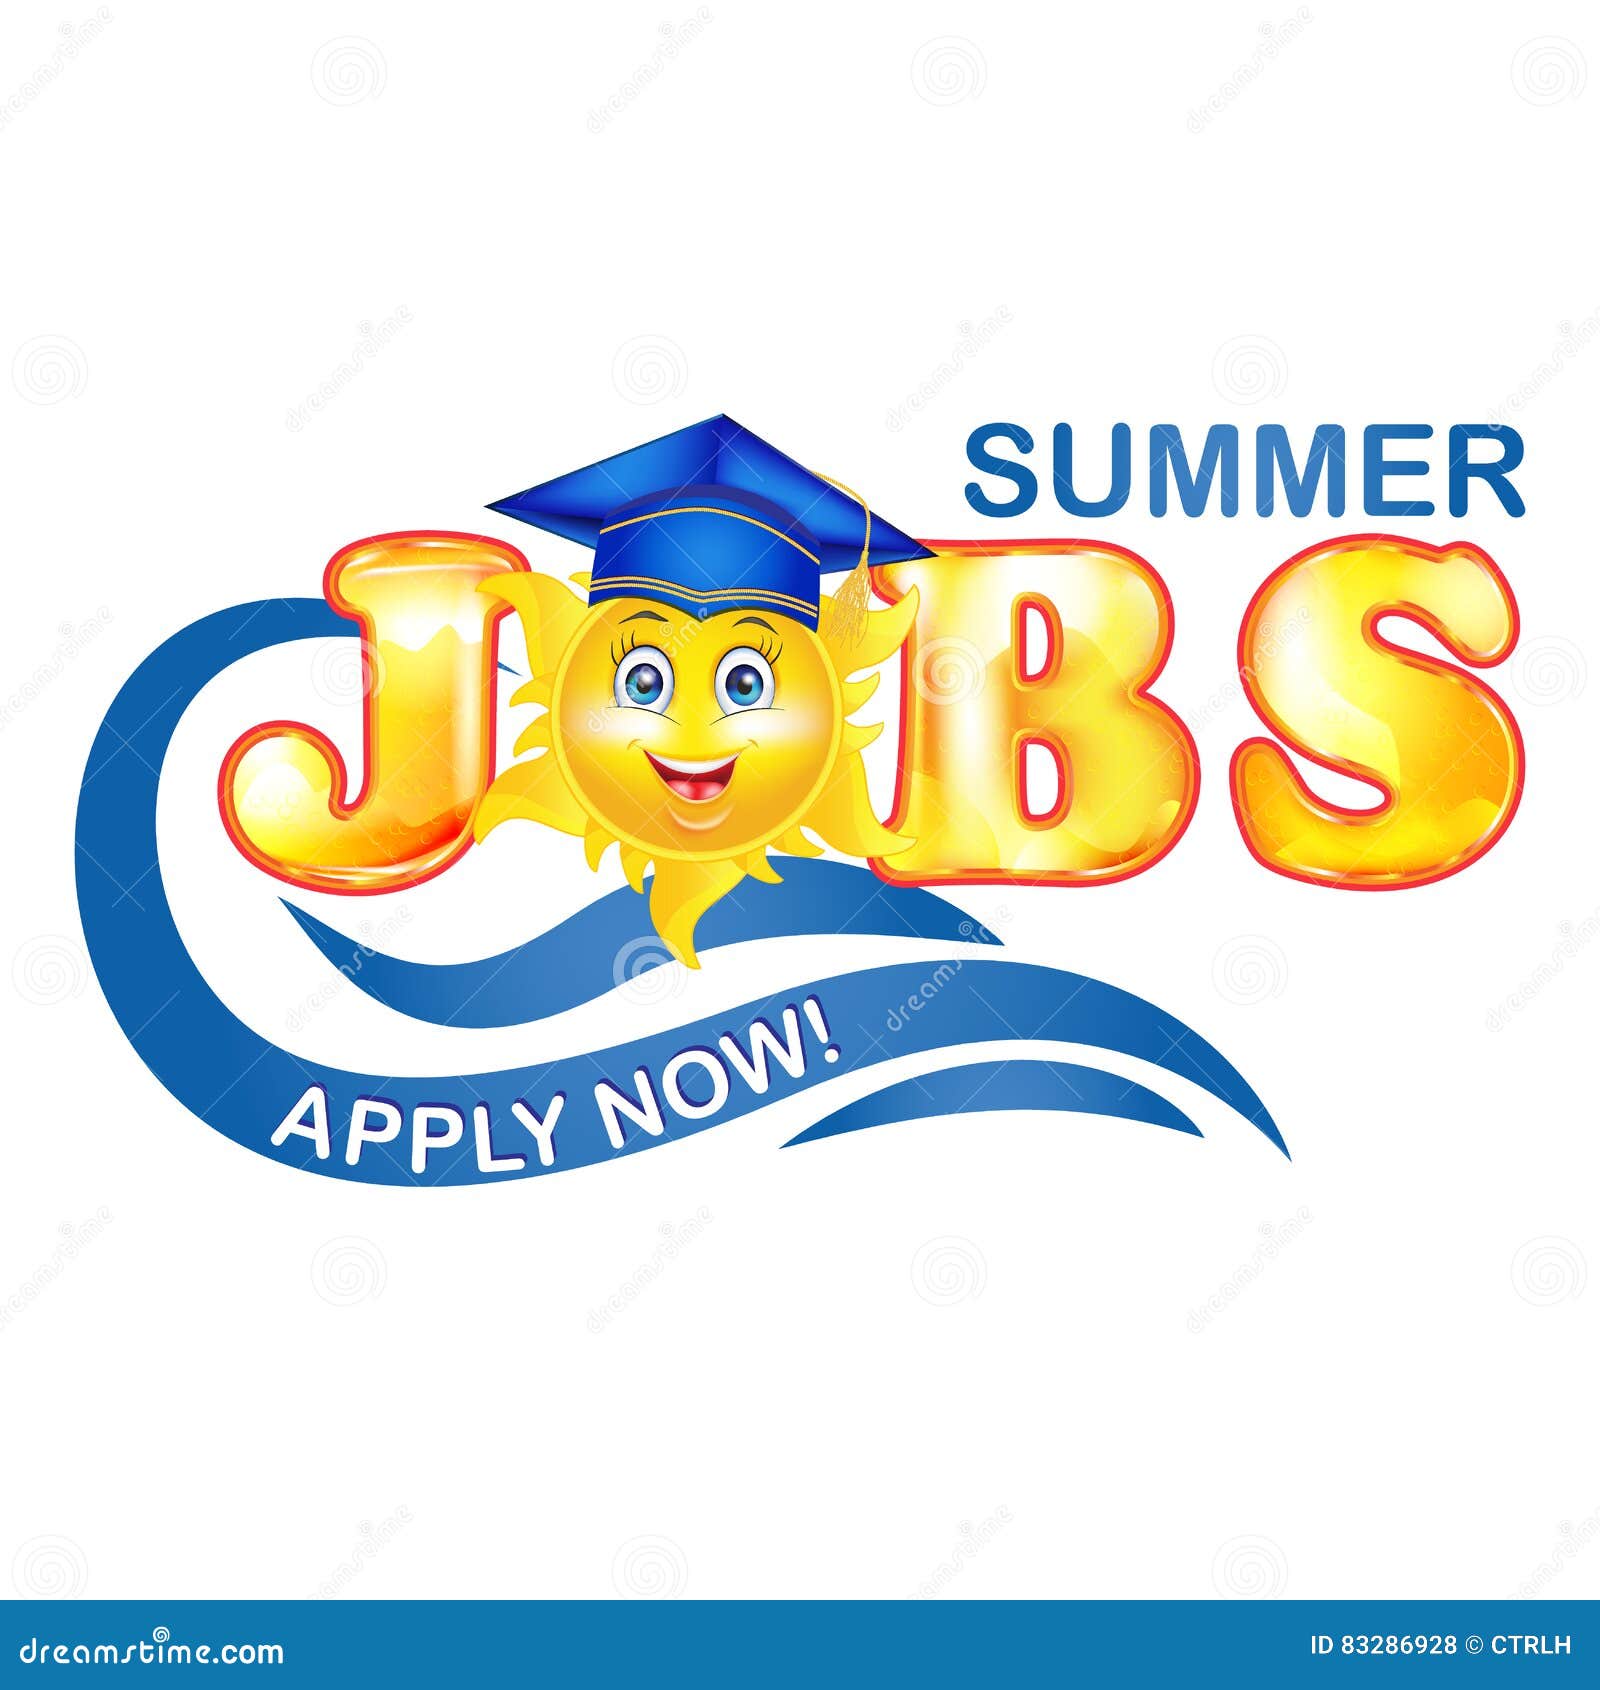 summer jobs for graduates label with cartooned sun